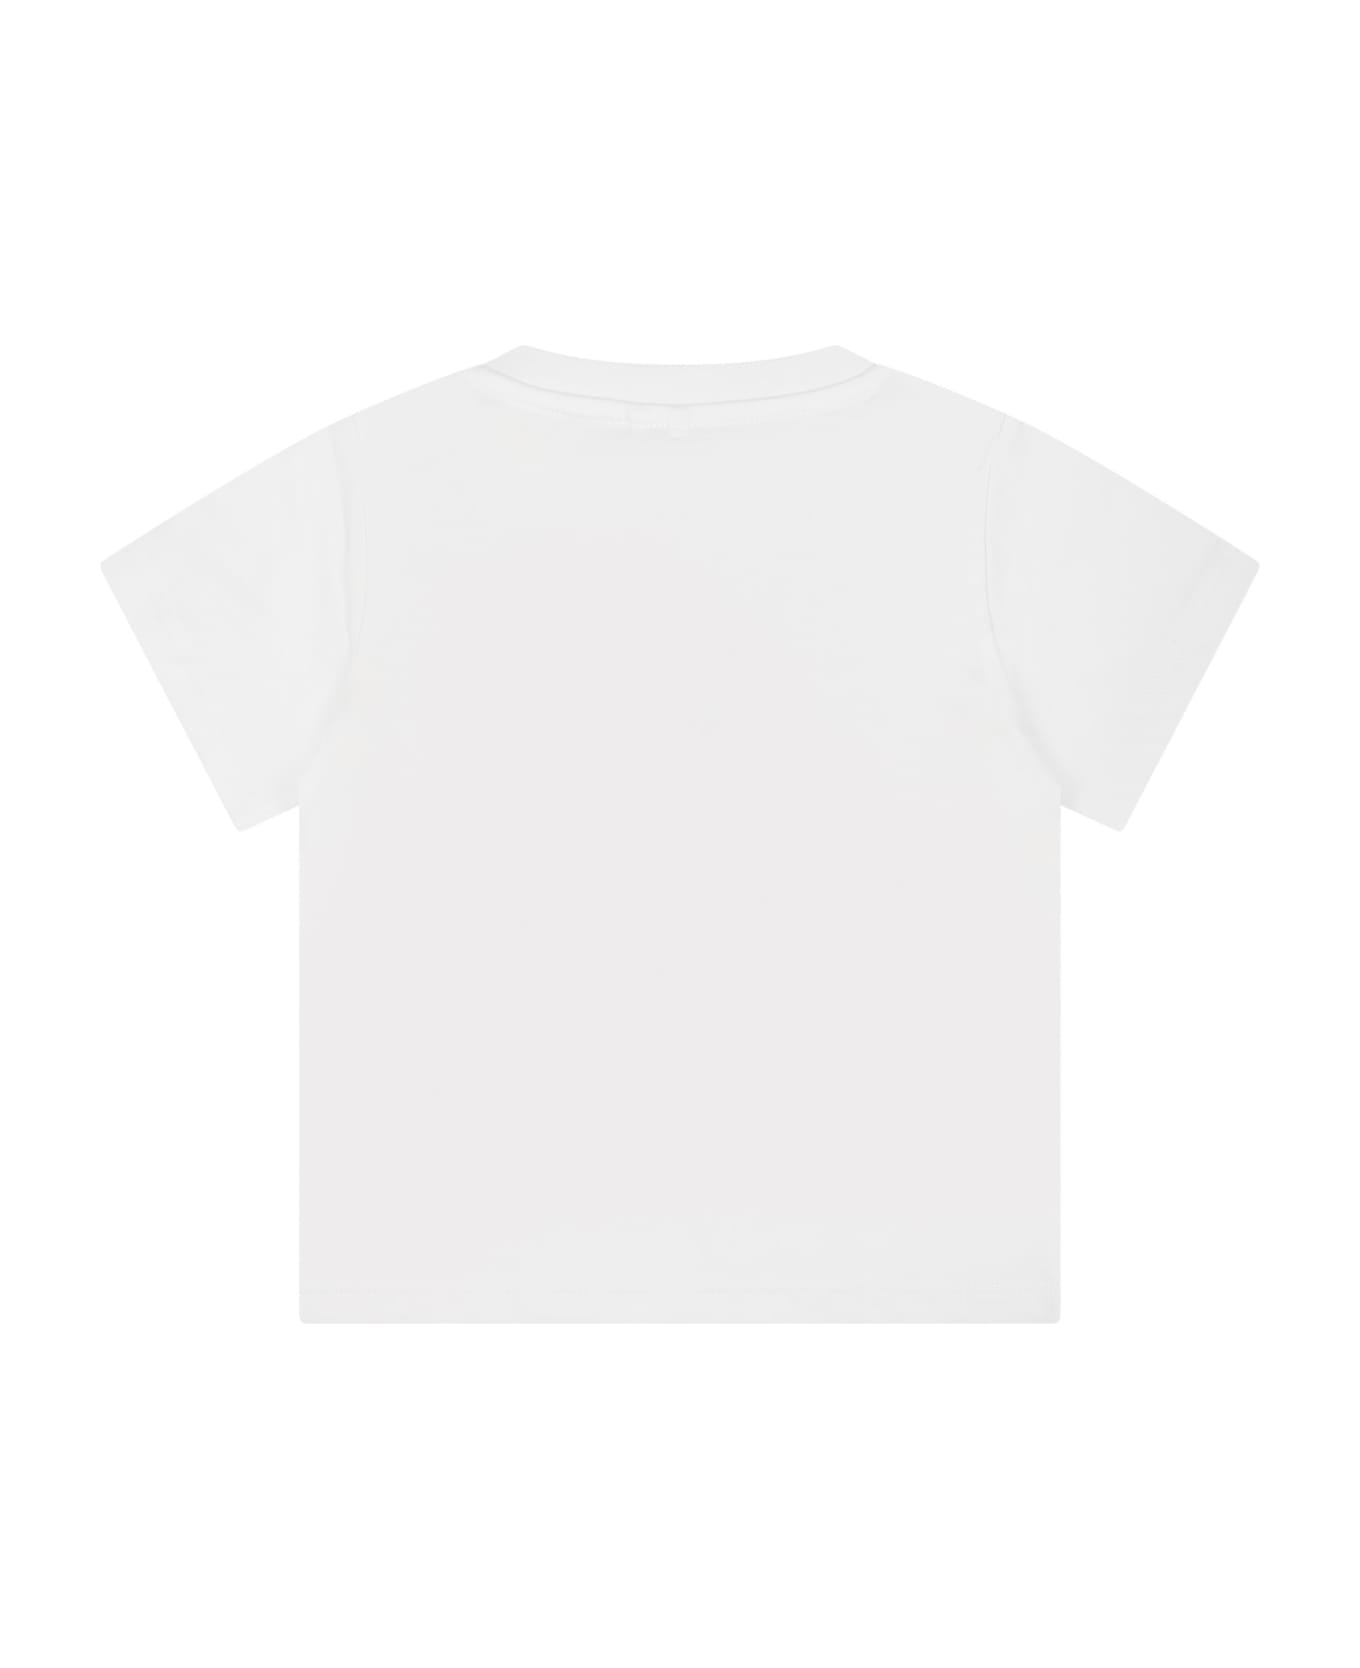 Stella McCartney Kids White T-shirt For Baby Girl With Multicolor Sun Print - White